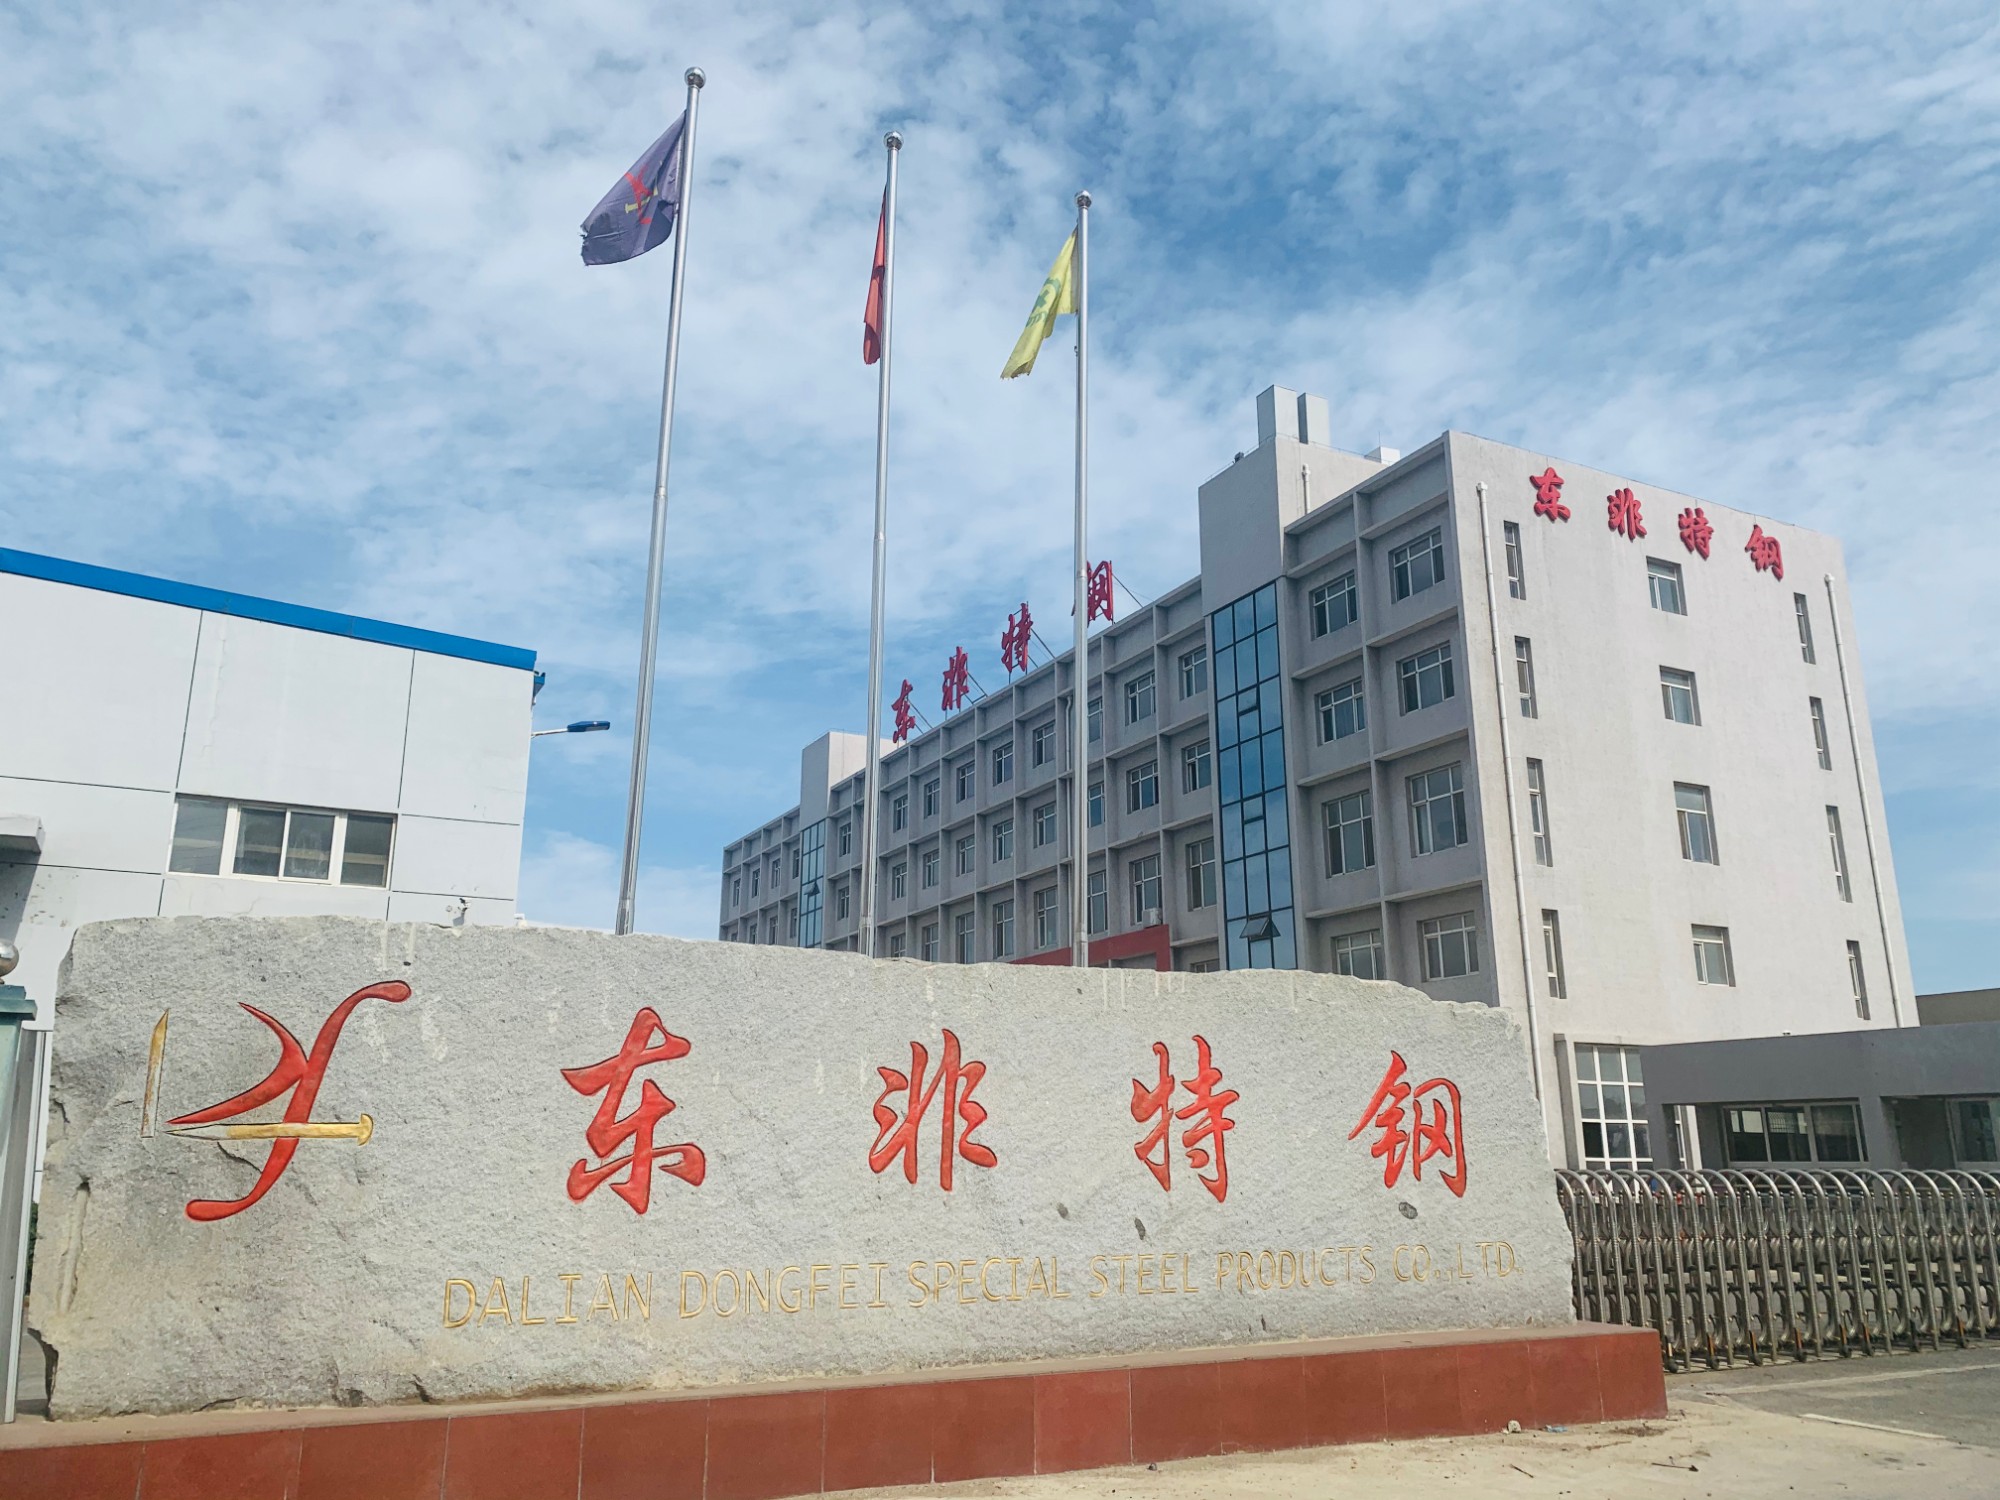 Dalian Dongfei Special Steel Products Co., Ltd